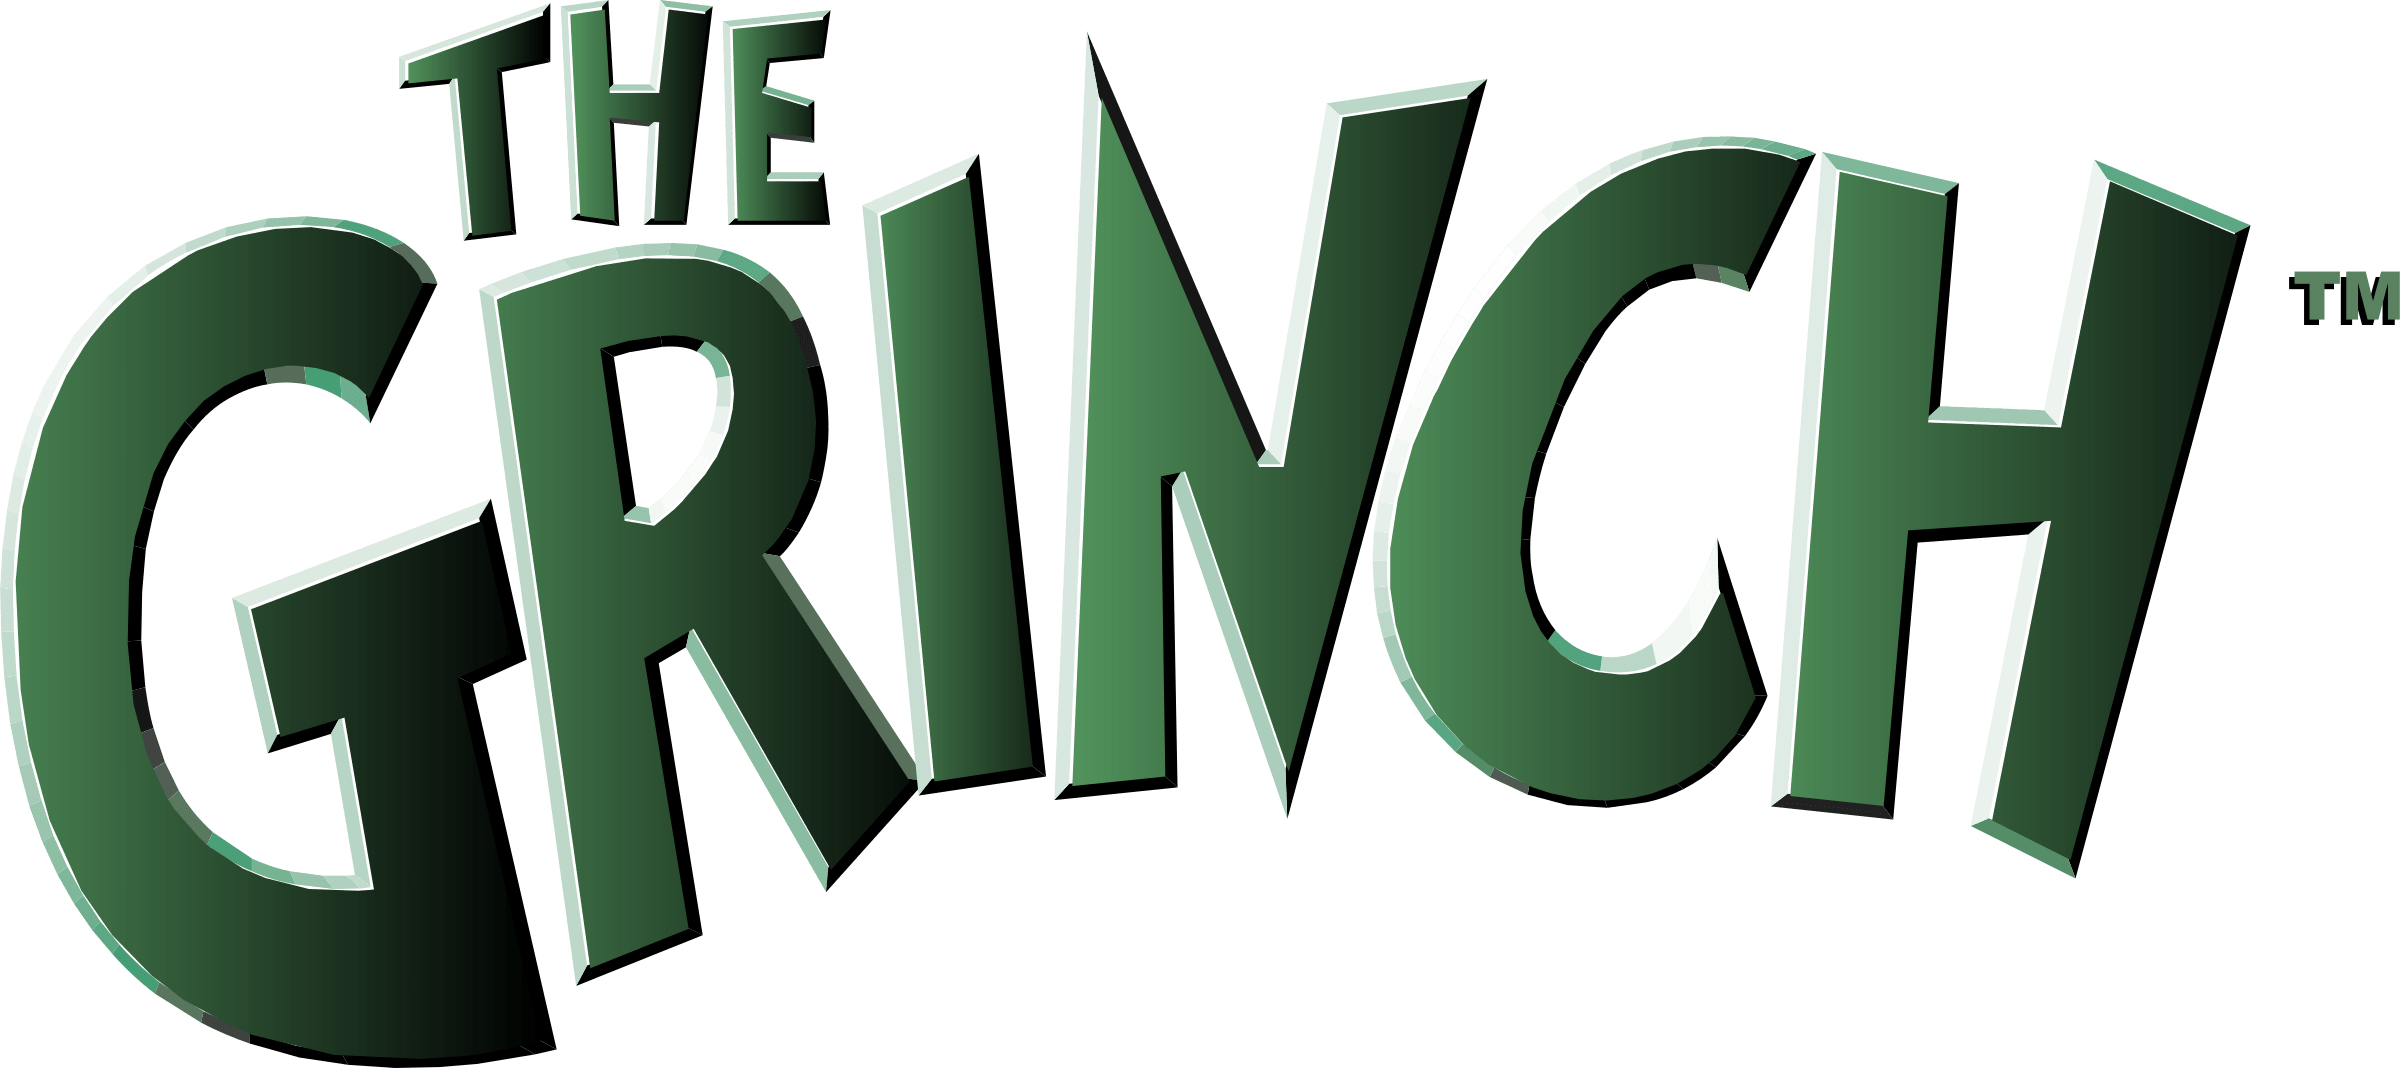 Grinch Logo - The Grinch Logo PNG Transparent & SVG Vector - Freebie Supply